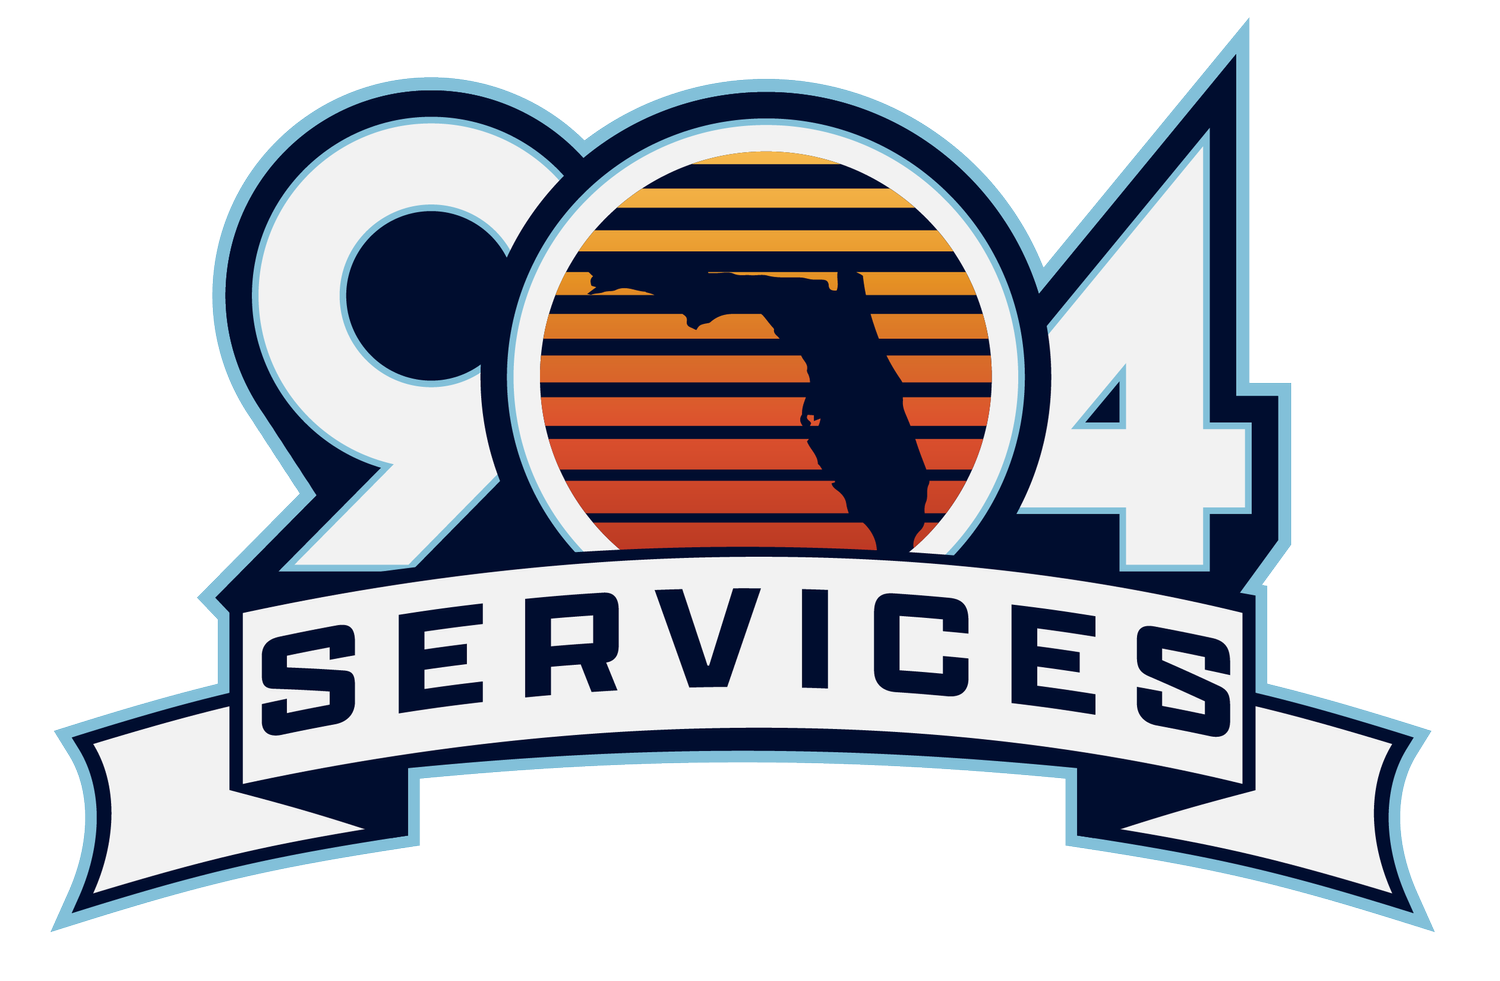 904 Services